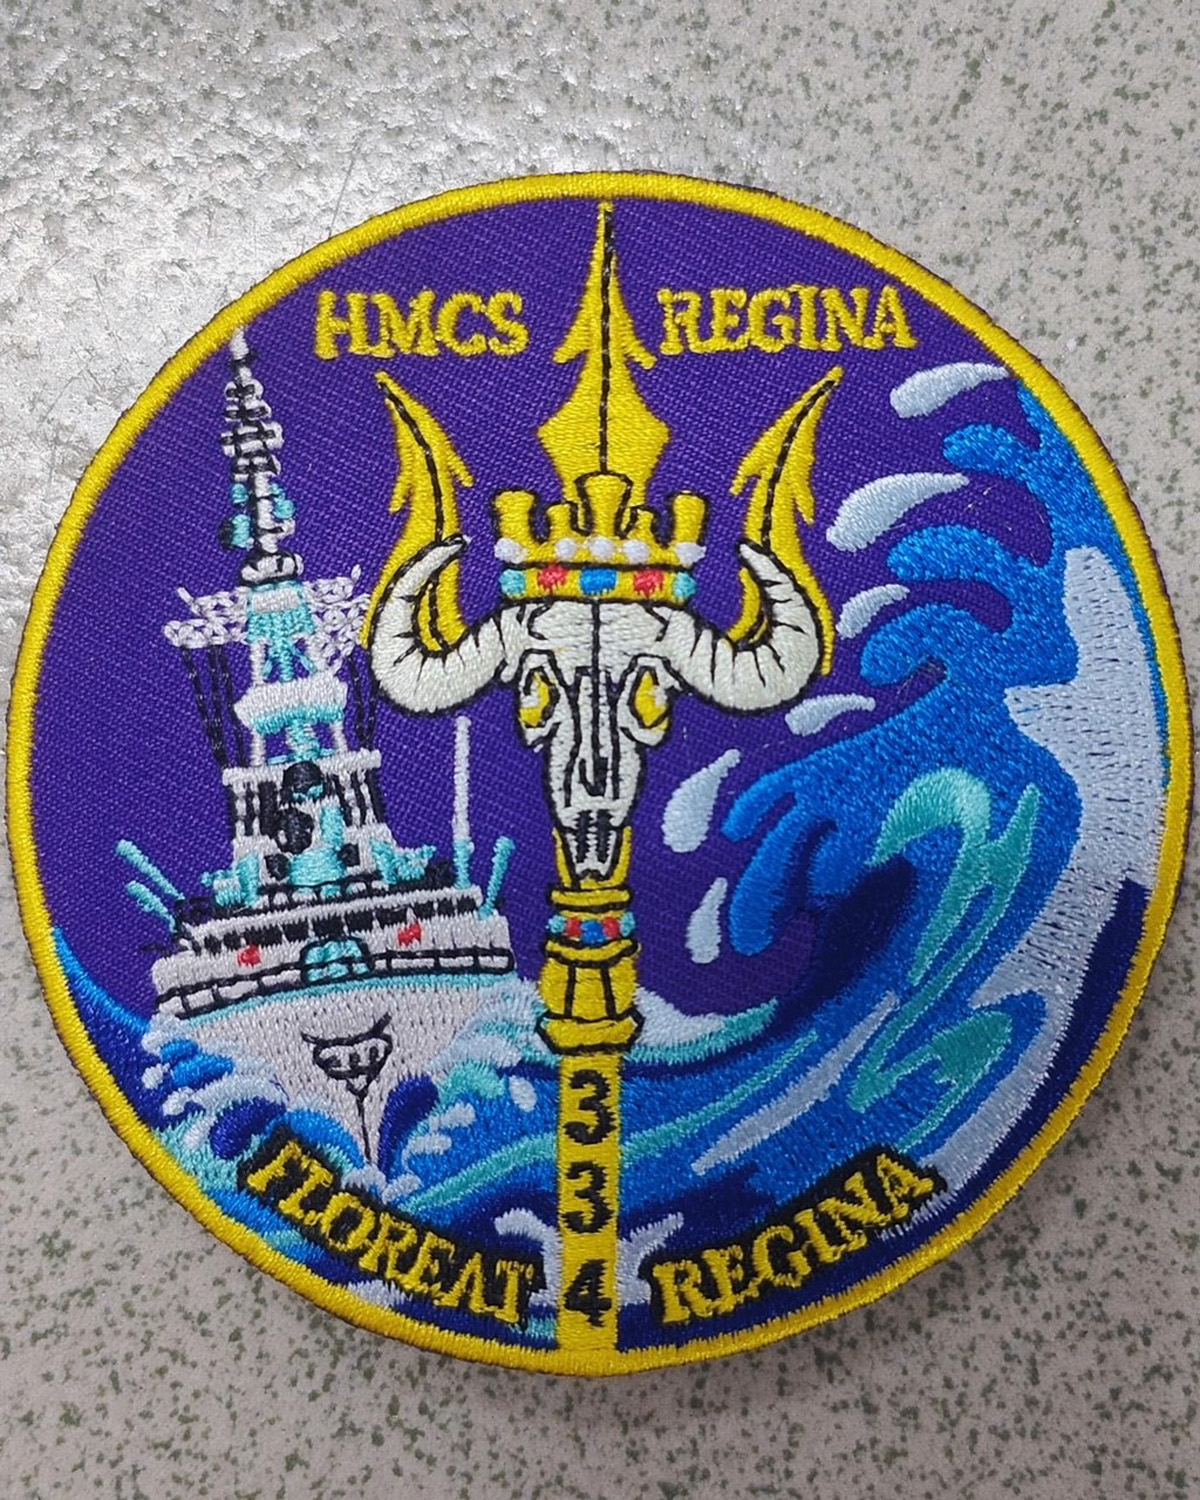 HMCS Regina's new morale patch design. Photos supplied